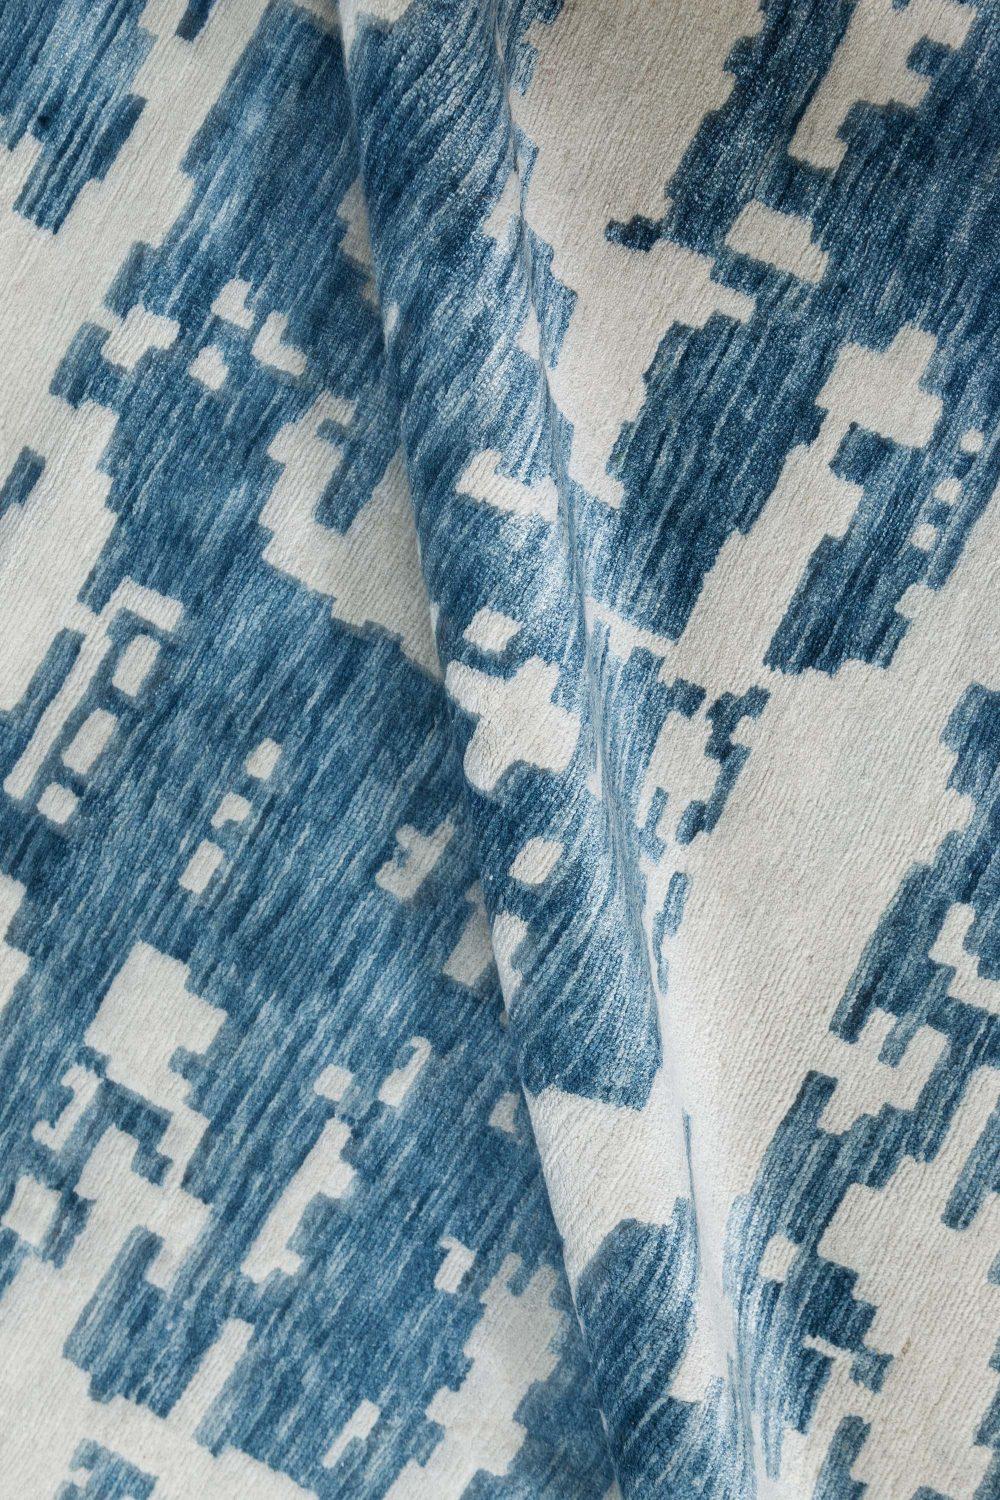 Contemporary oversized blue, white Aqua element rug by Doris Leslie Blau
Size: 13'10